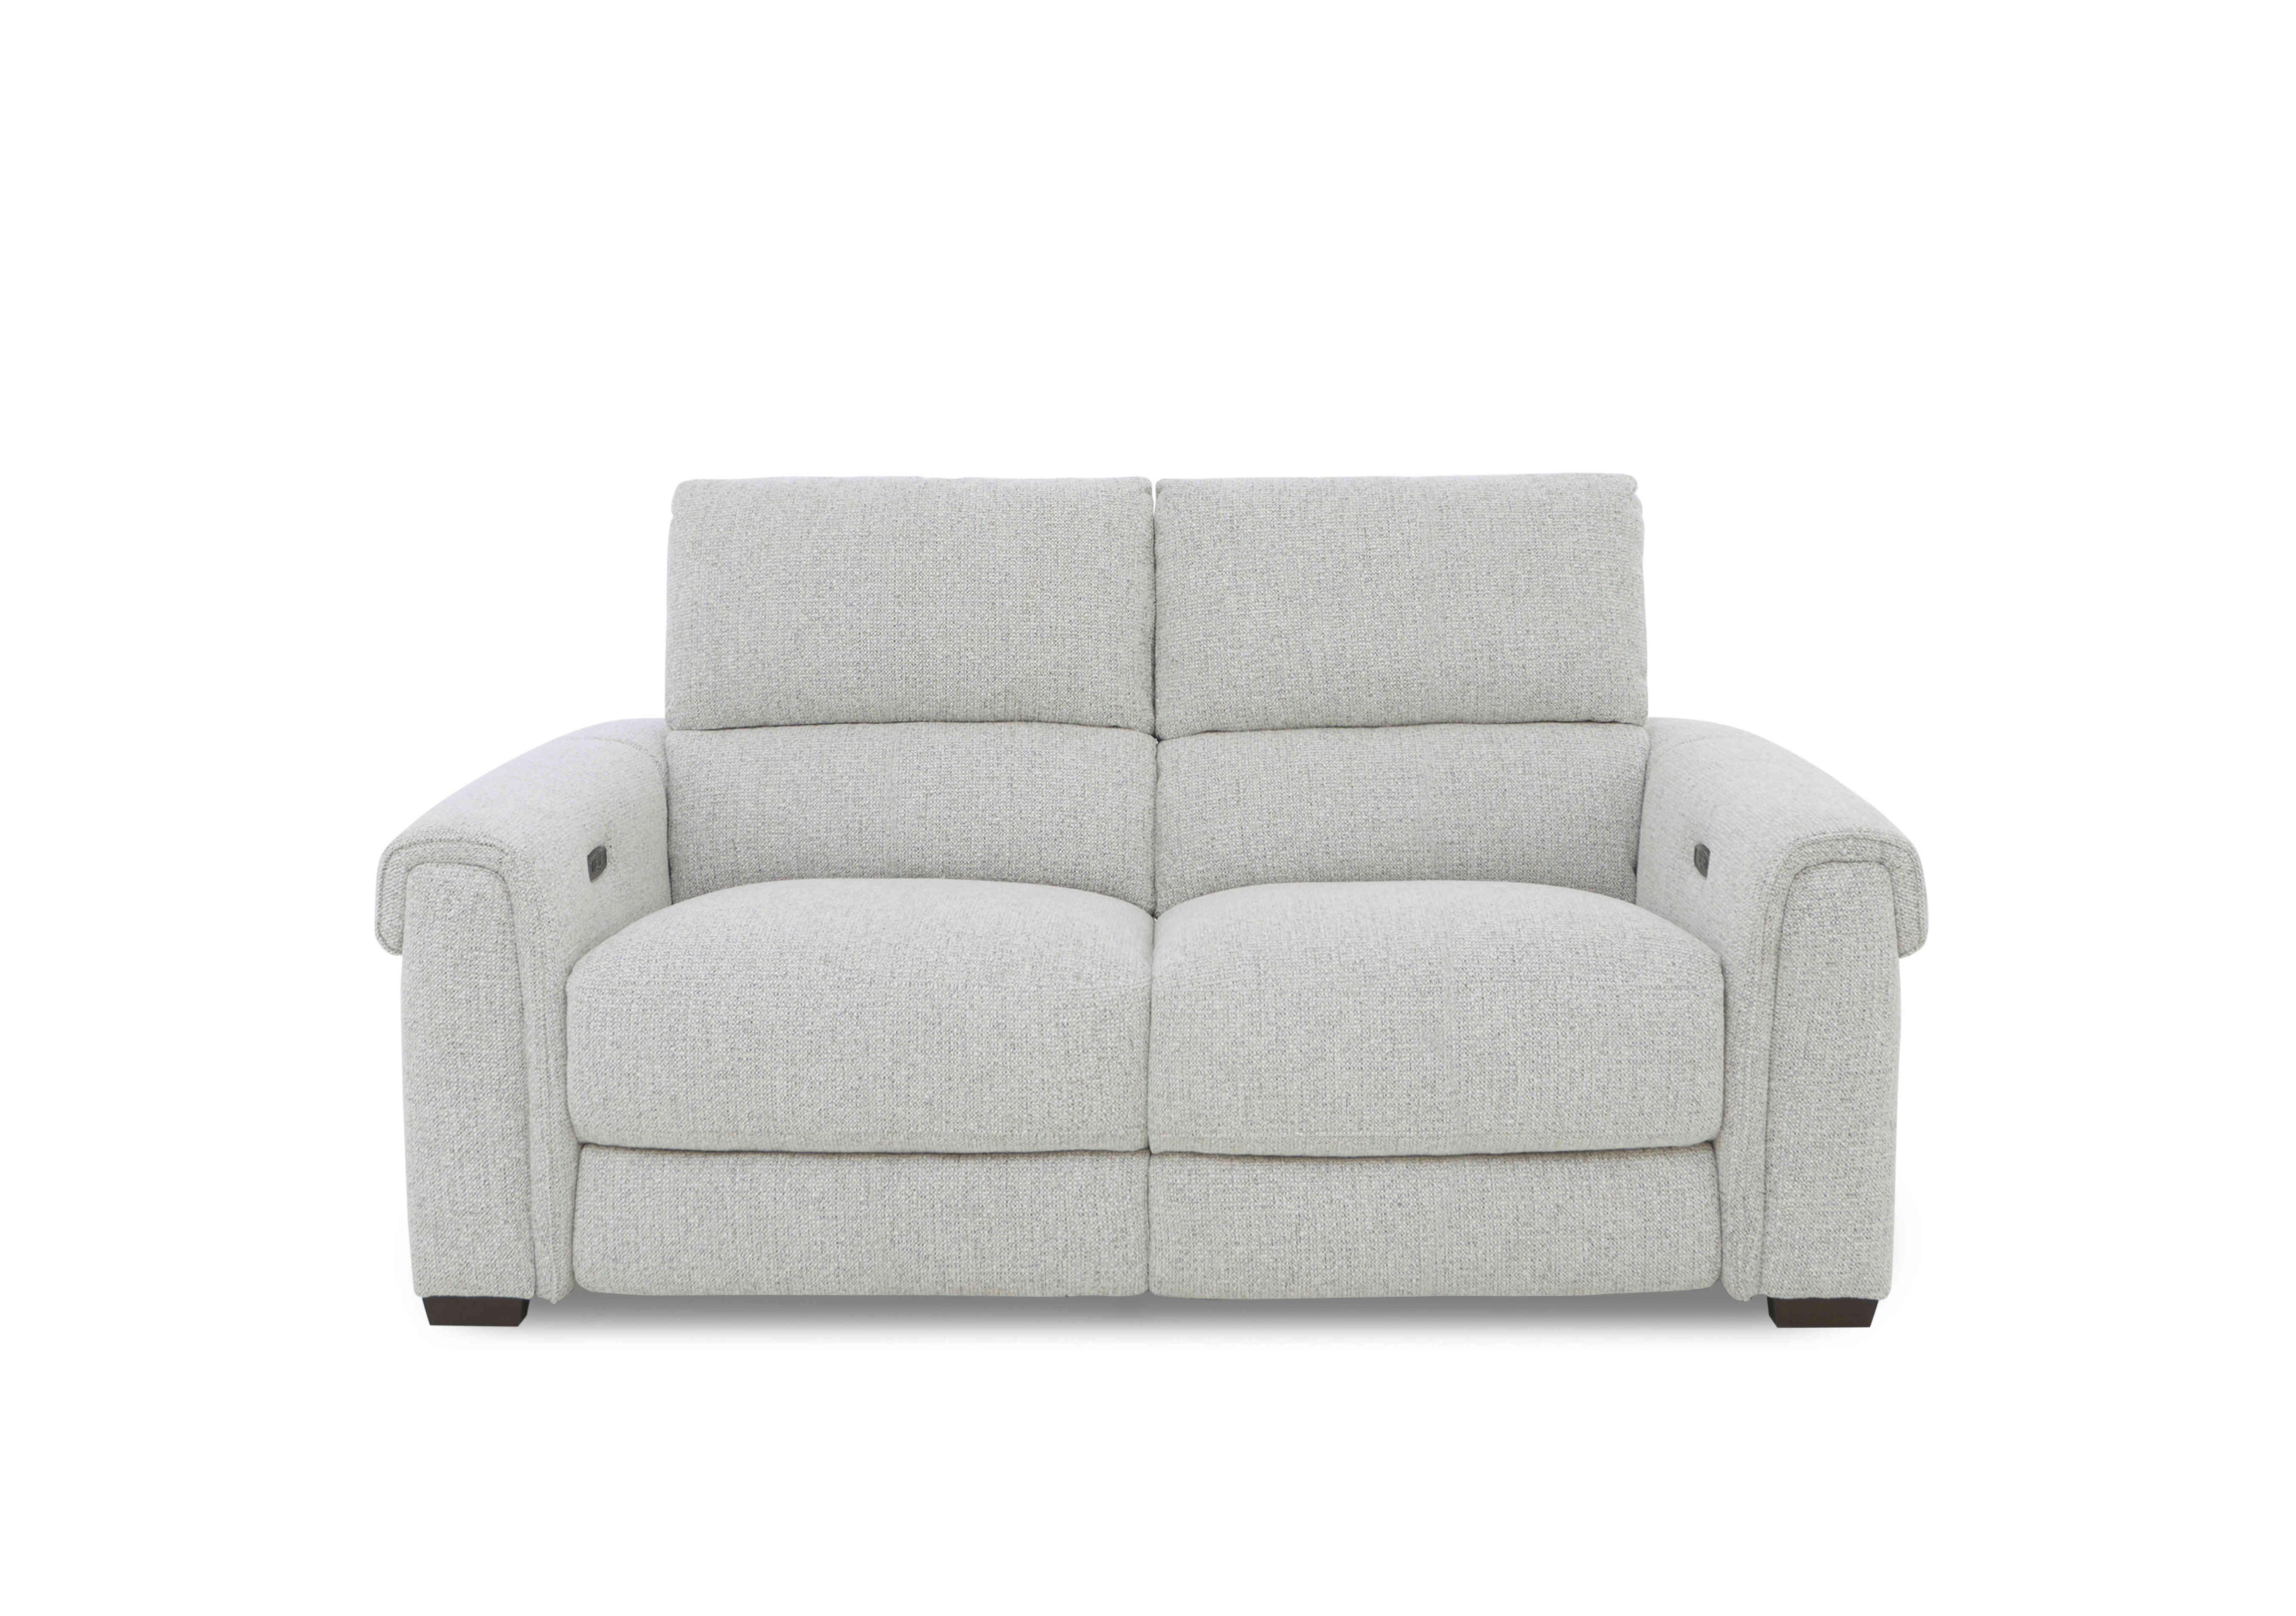 Nixon Fabric 2 Seater Sofa in Fab-Mil-R104 Oyster on Furniture Village